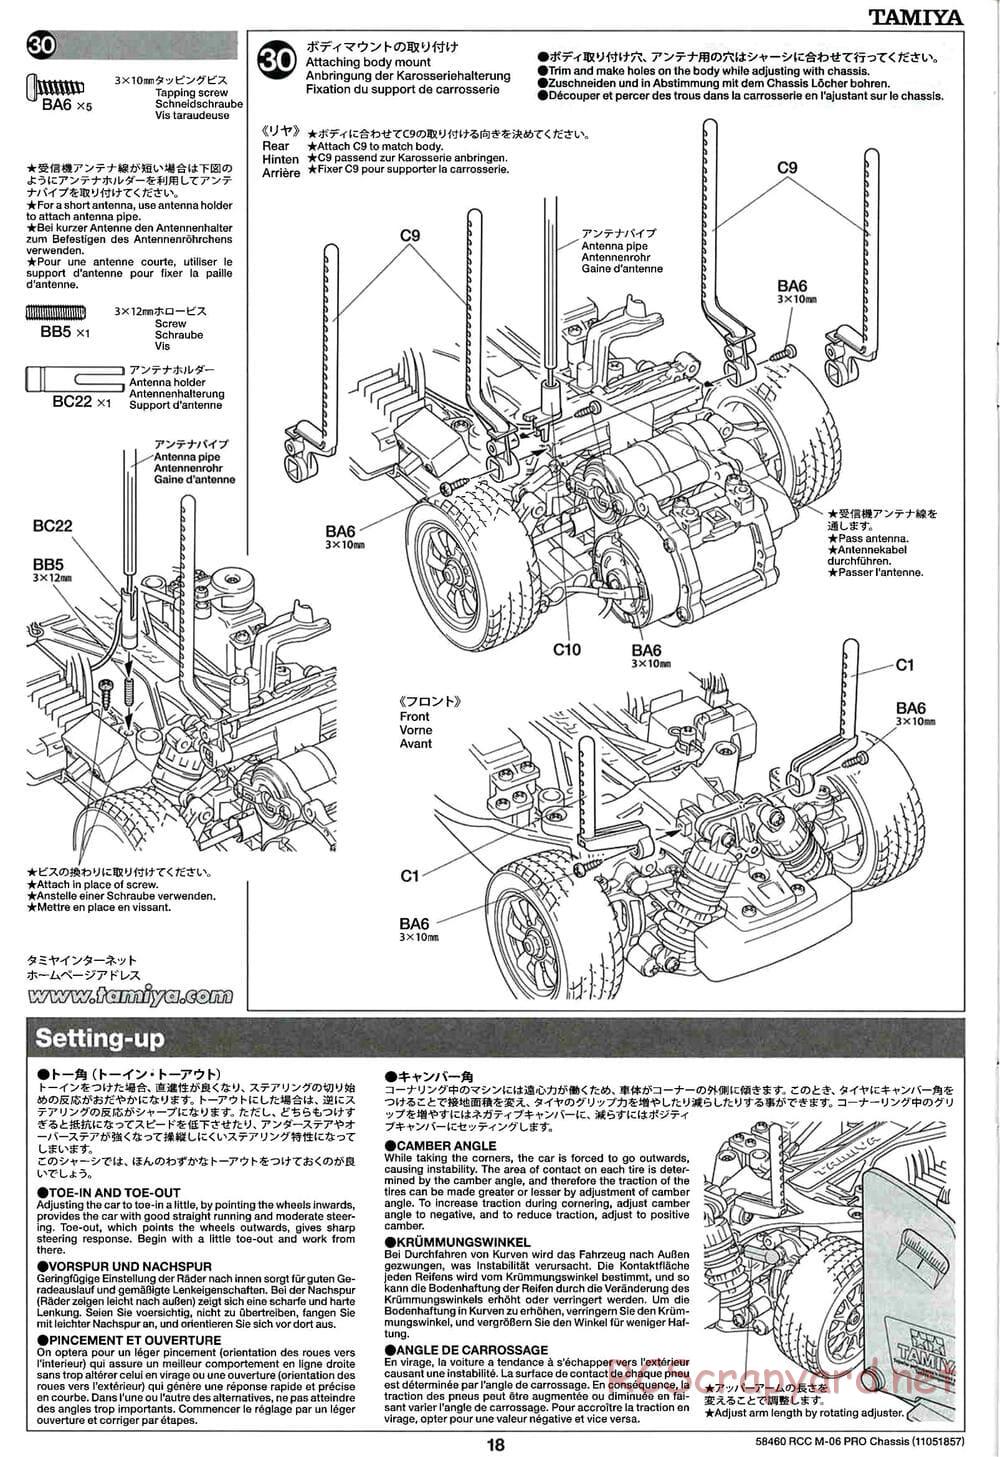 Tamiya - M-06 Pro Chassis - Manual - Page 18